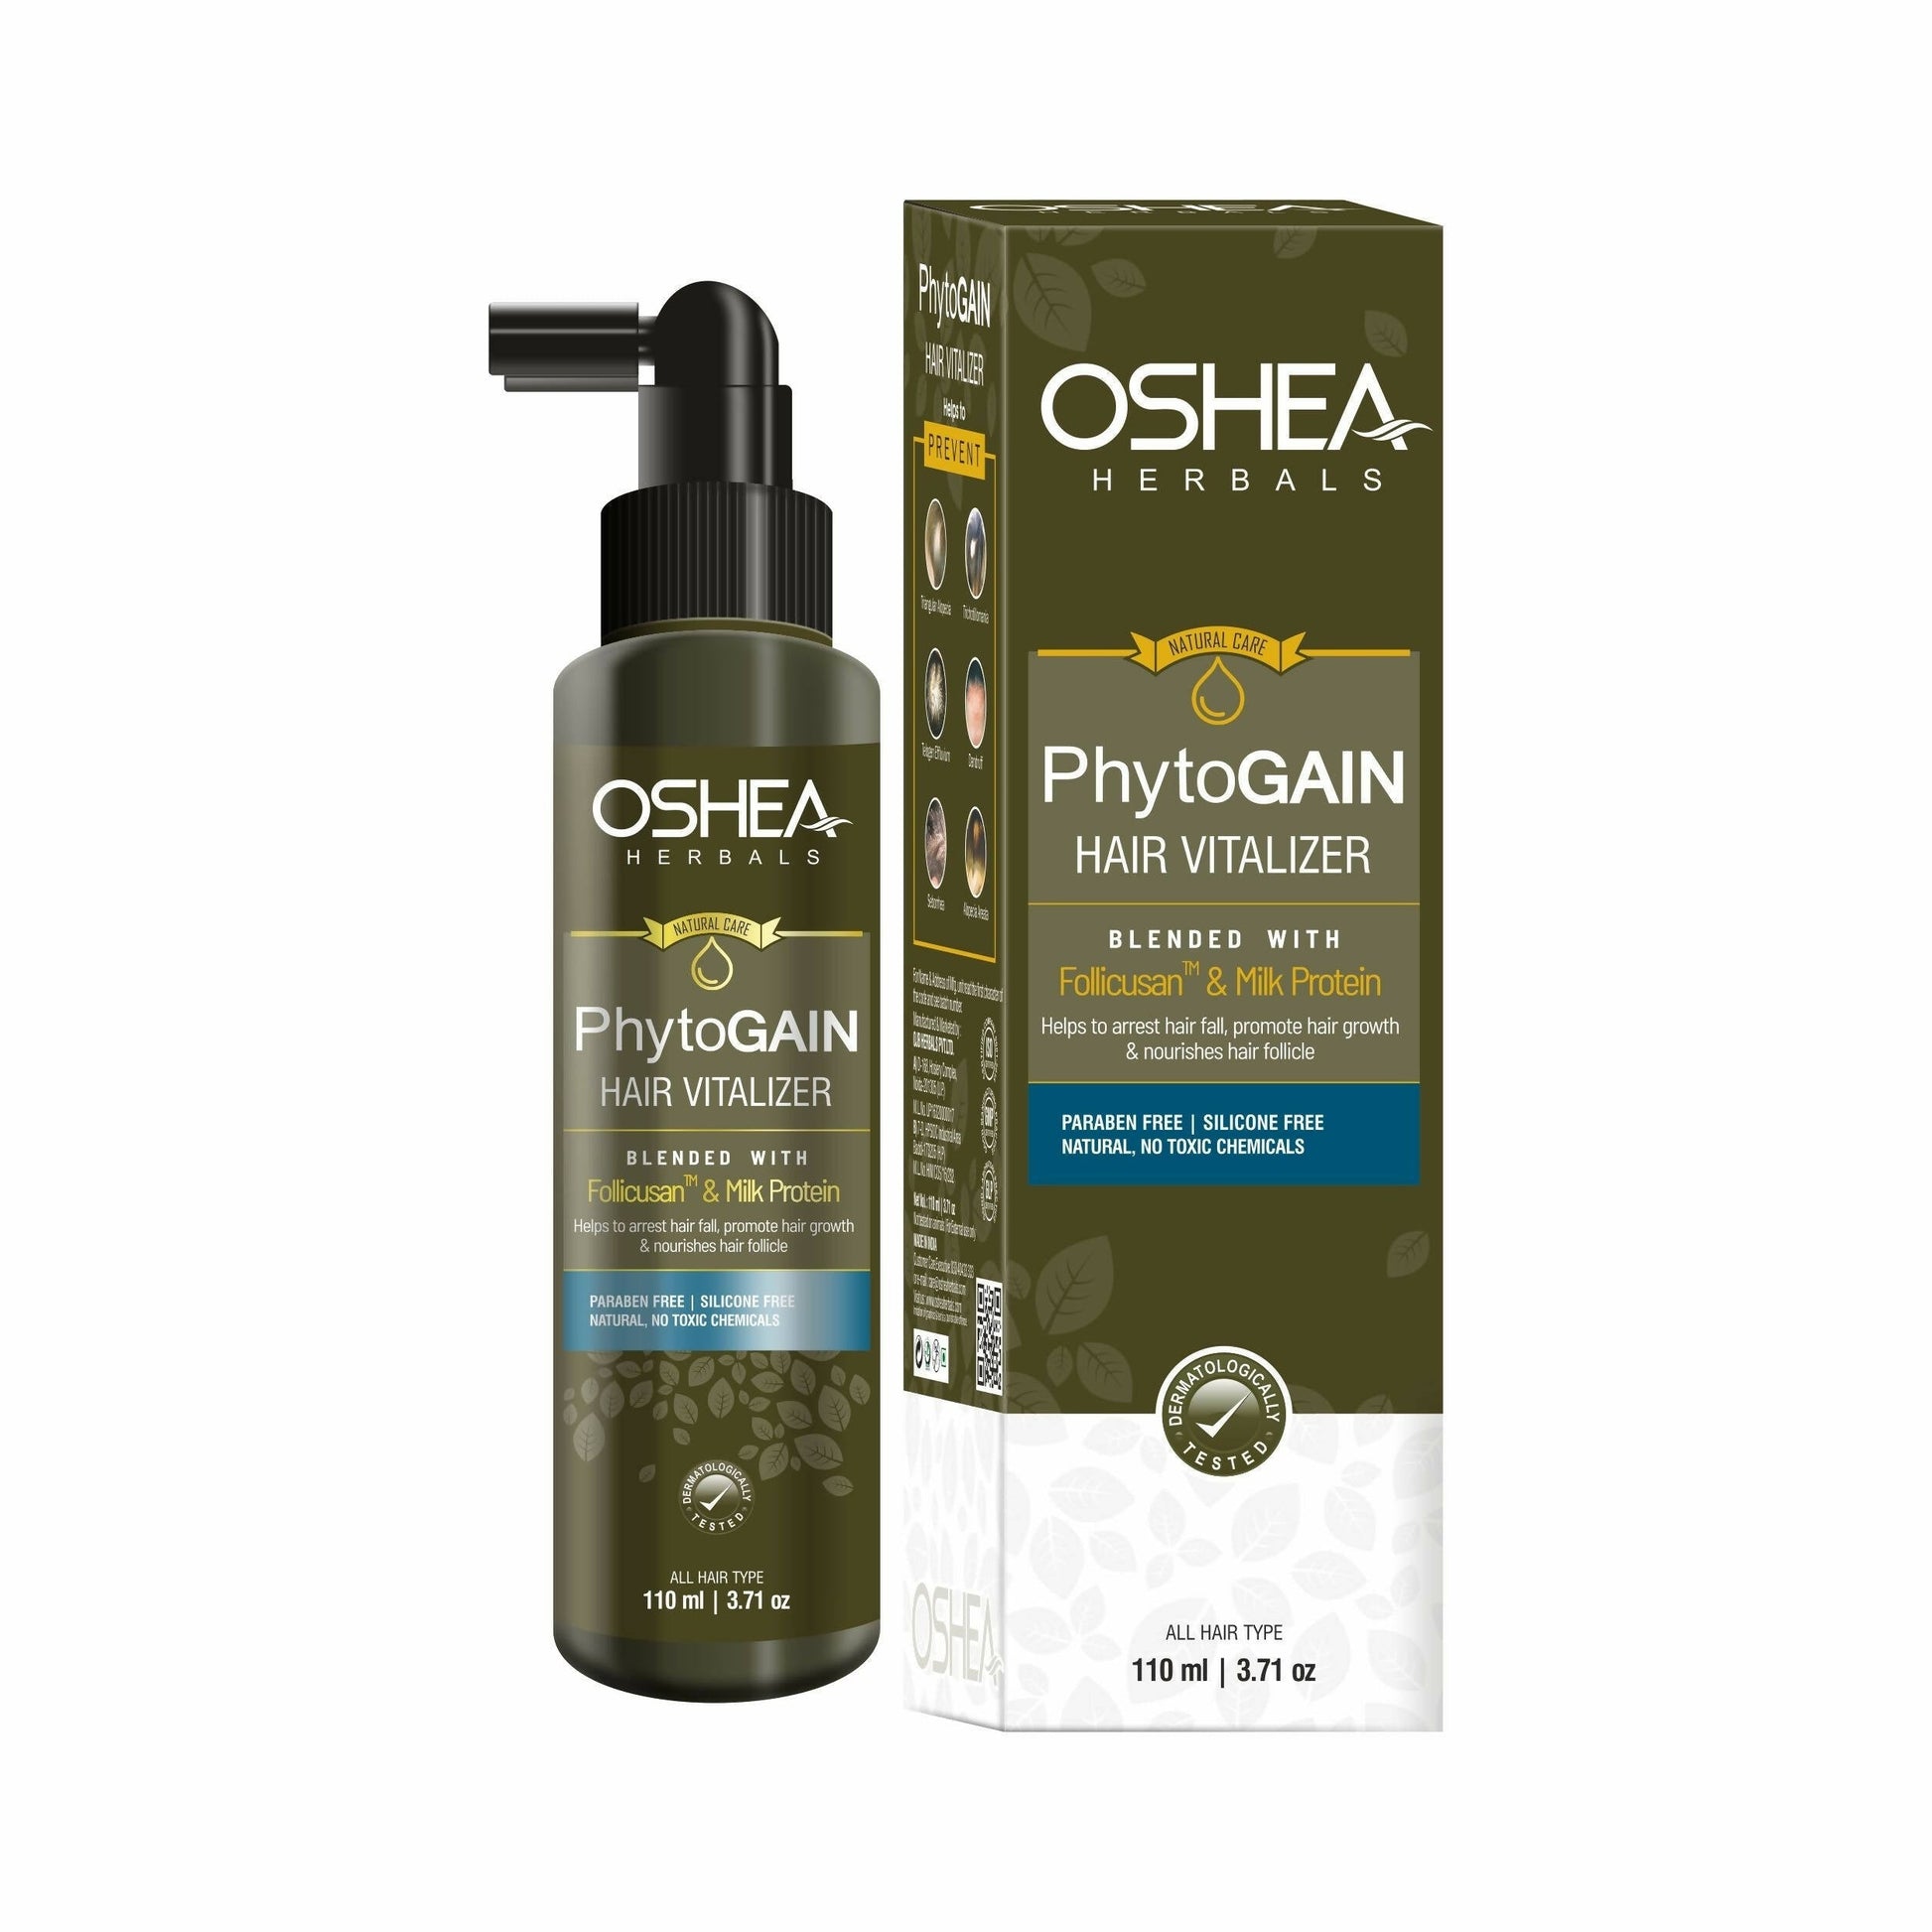 Oshea Herbals Phytogain Hair Vitalizer - buy-in-usa-australia-canada